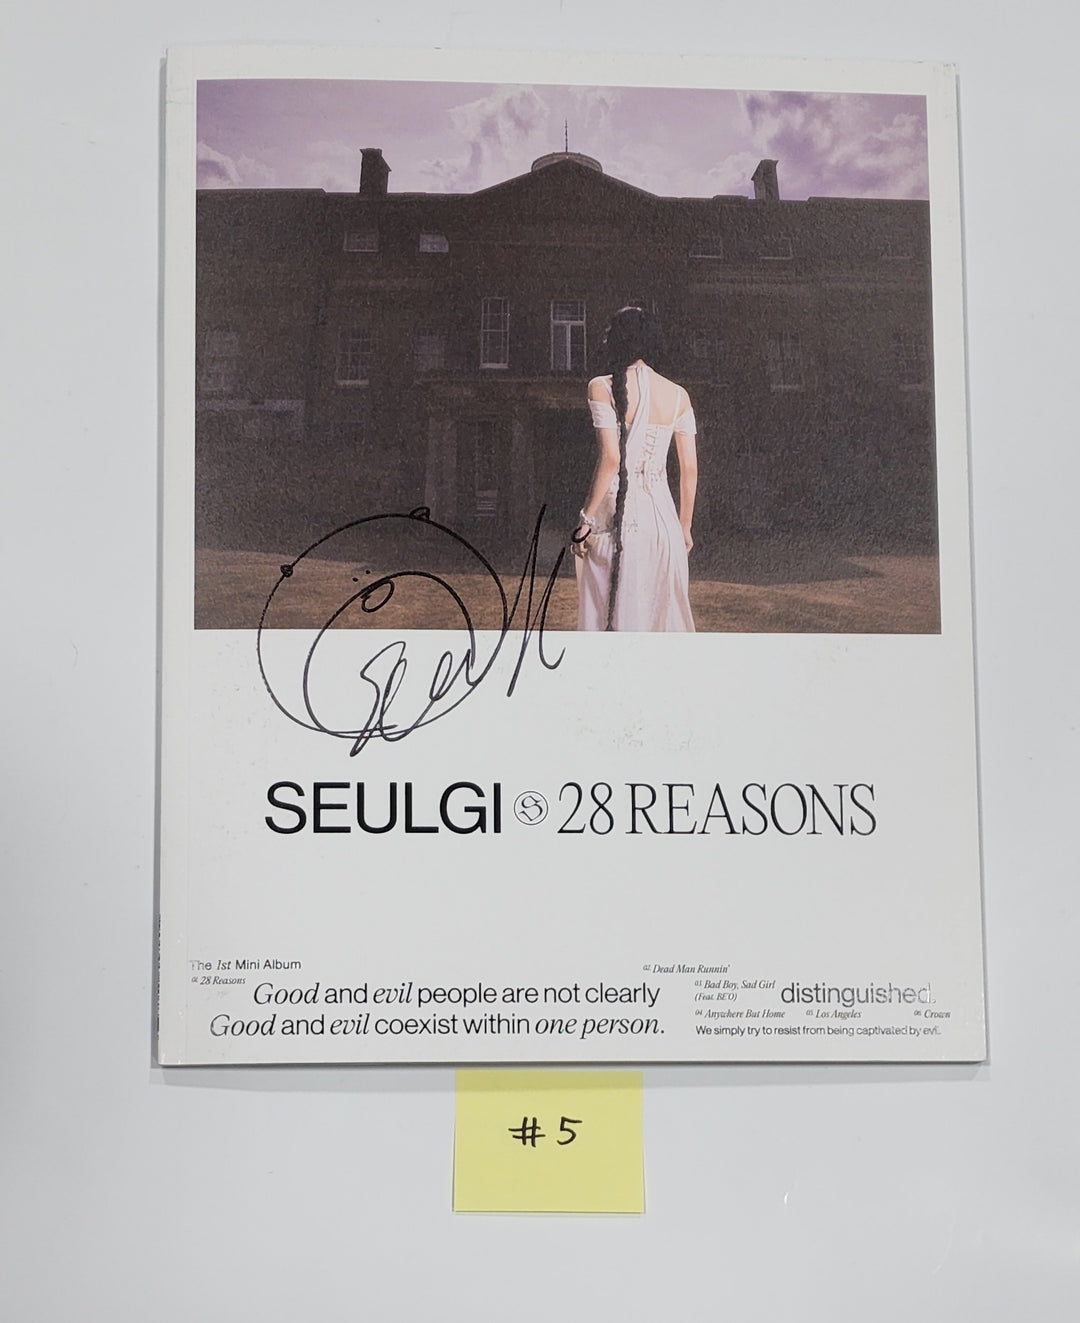 SEULGI (of Red velvet) "28 Reasons" - Hand Autographed(Signed) Promo Album